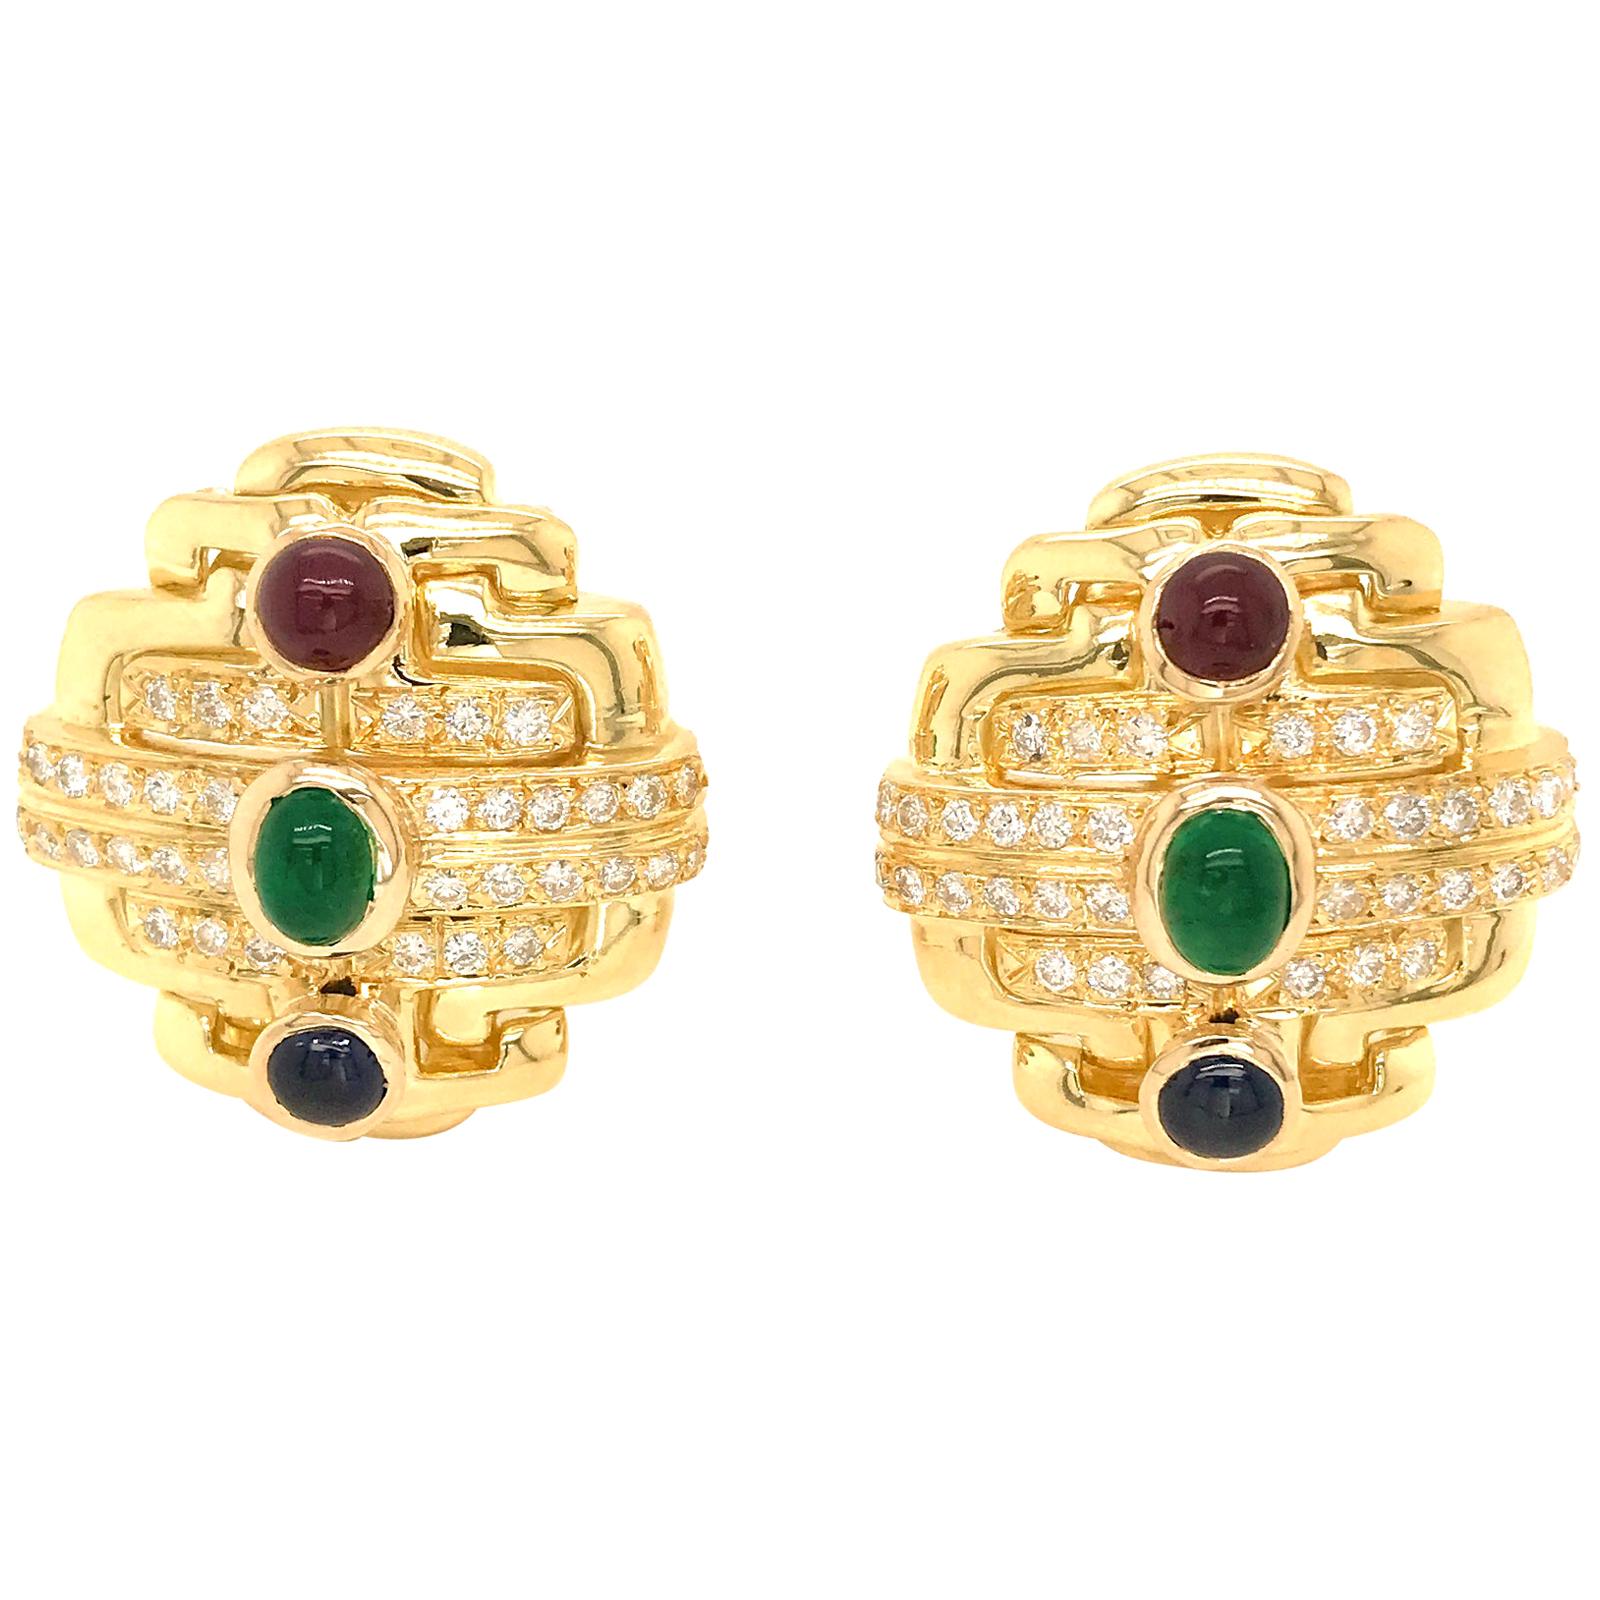 18 Karat Yellow Gold Precious Stone and Diamond Earrings